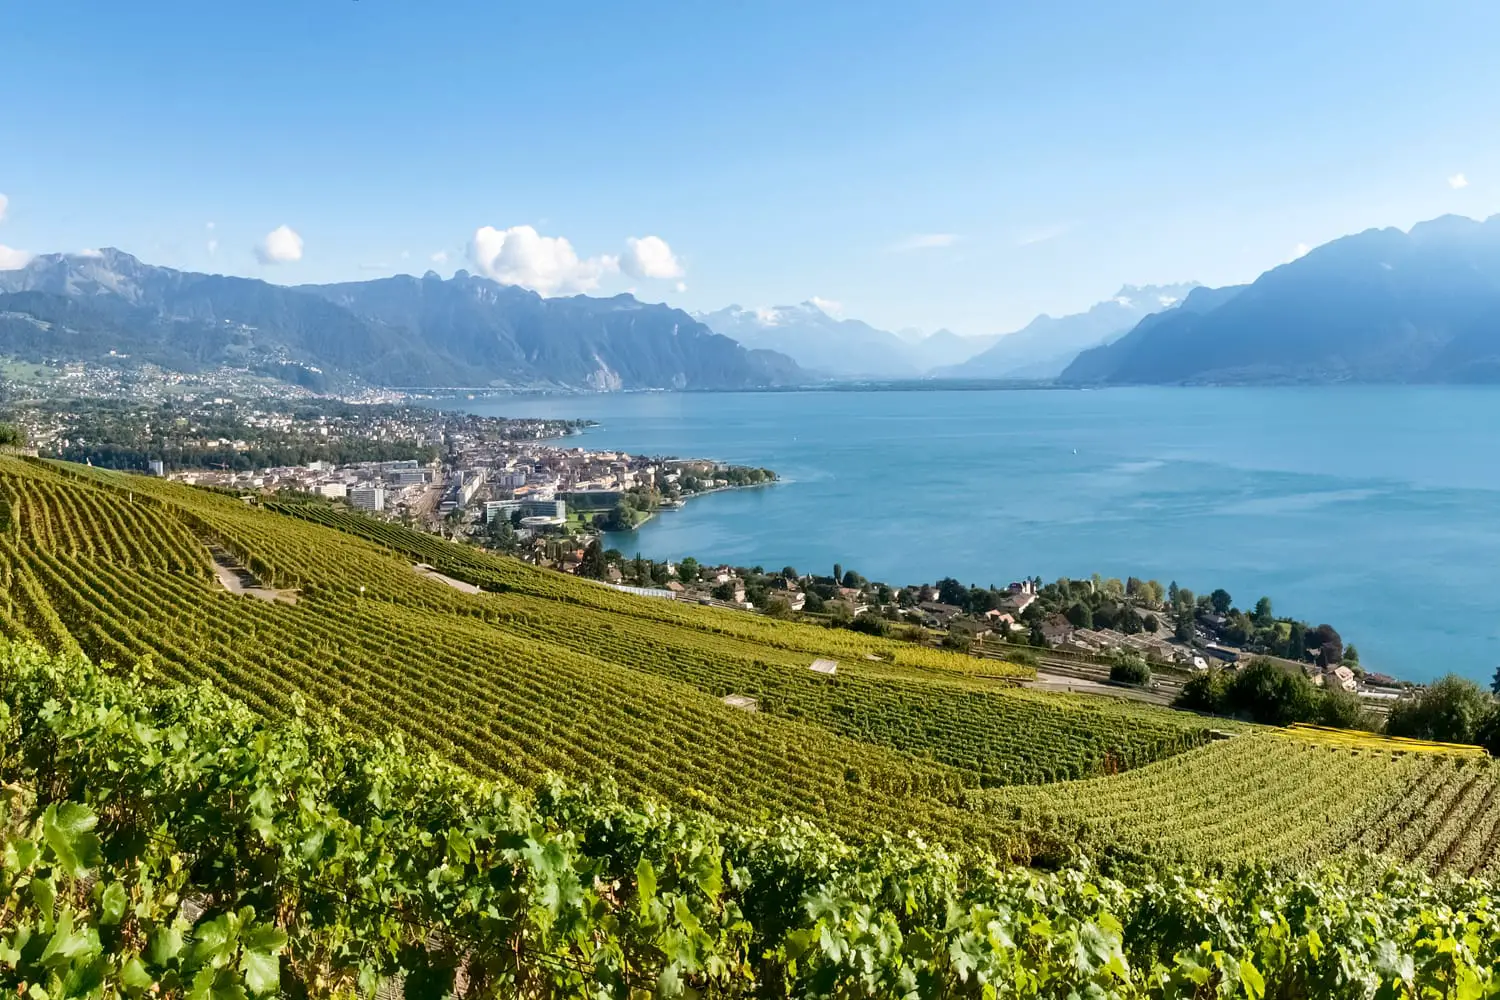 Lavaux, Switzerland: Landscape of Lavaux Vineyard Terrace hiking trail, Lake Geneva and Swiss mountains